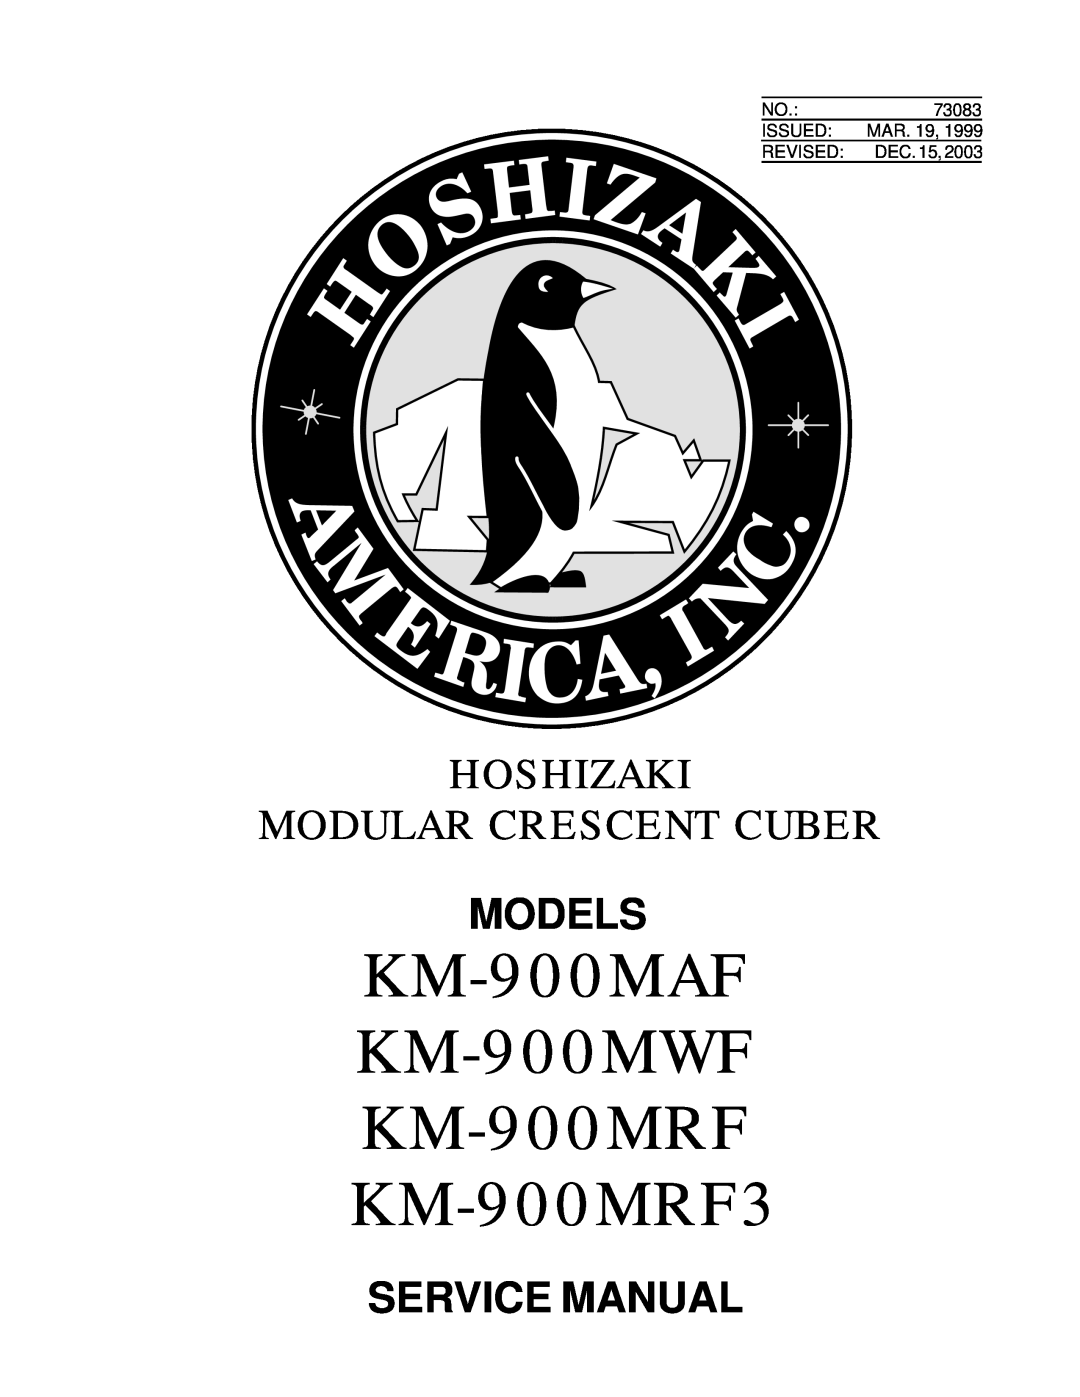 Hoshizaki service manual KM-900MAF KM-900MWF KM-900MRF KM-900MRF3, Hoshizaki Modular Crescent Cuber, Models 